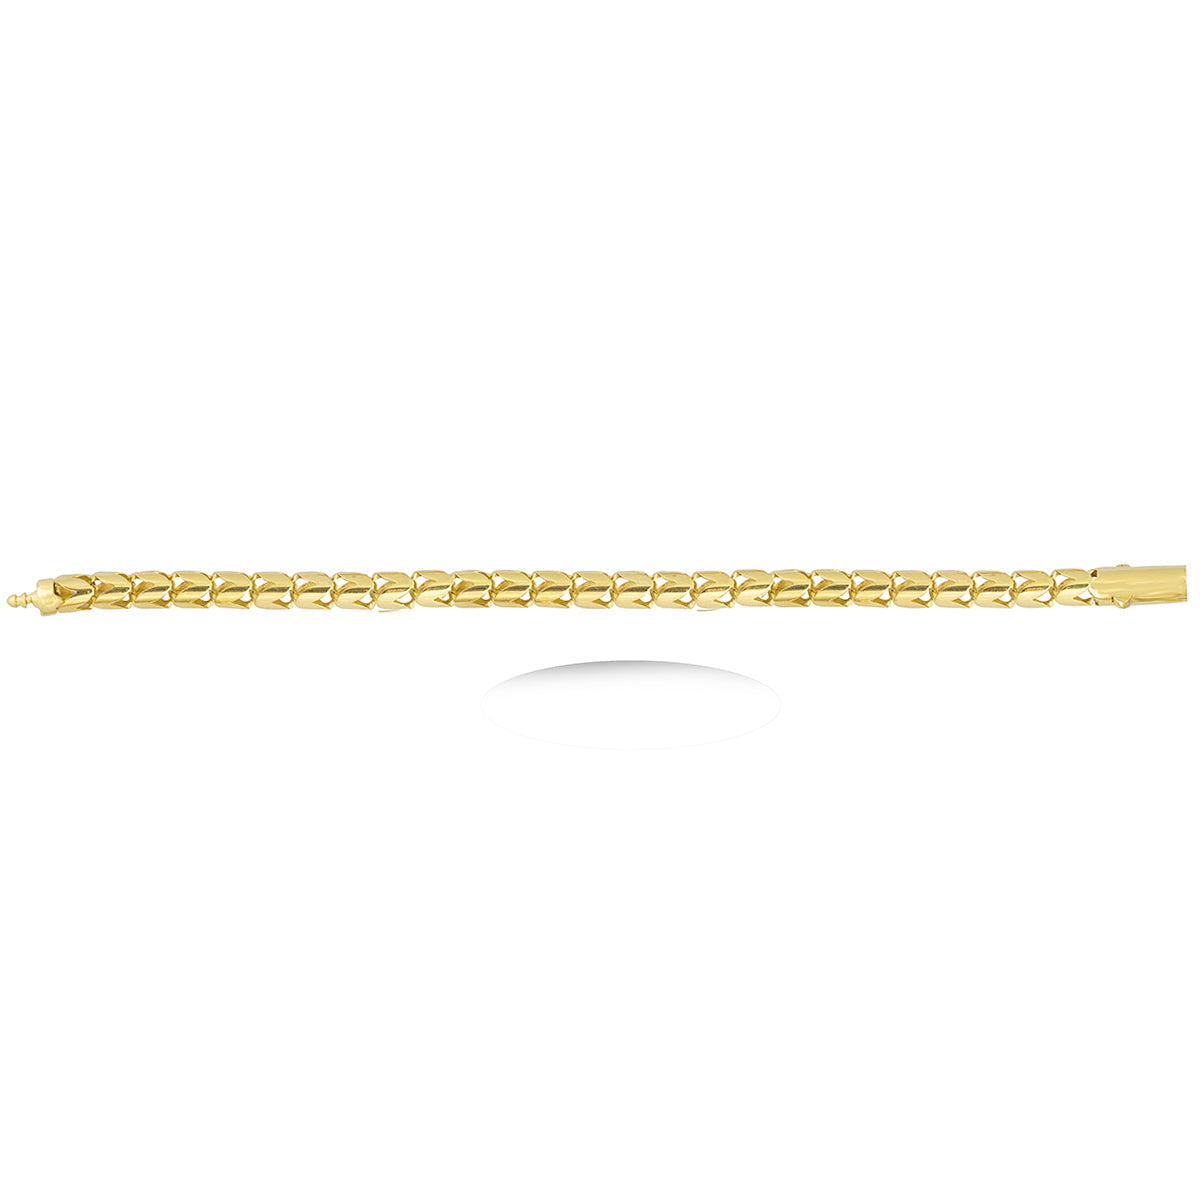 Cuban Curb Chain Bracelet in 18k Yellow Gold